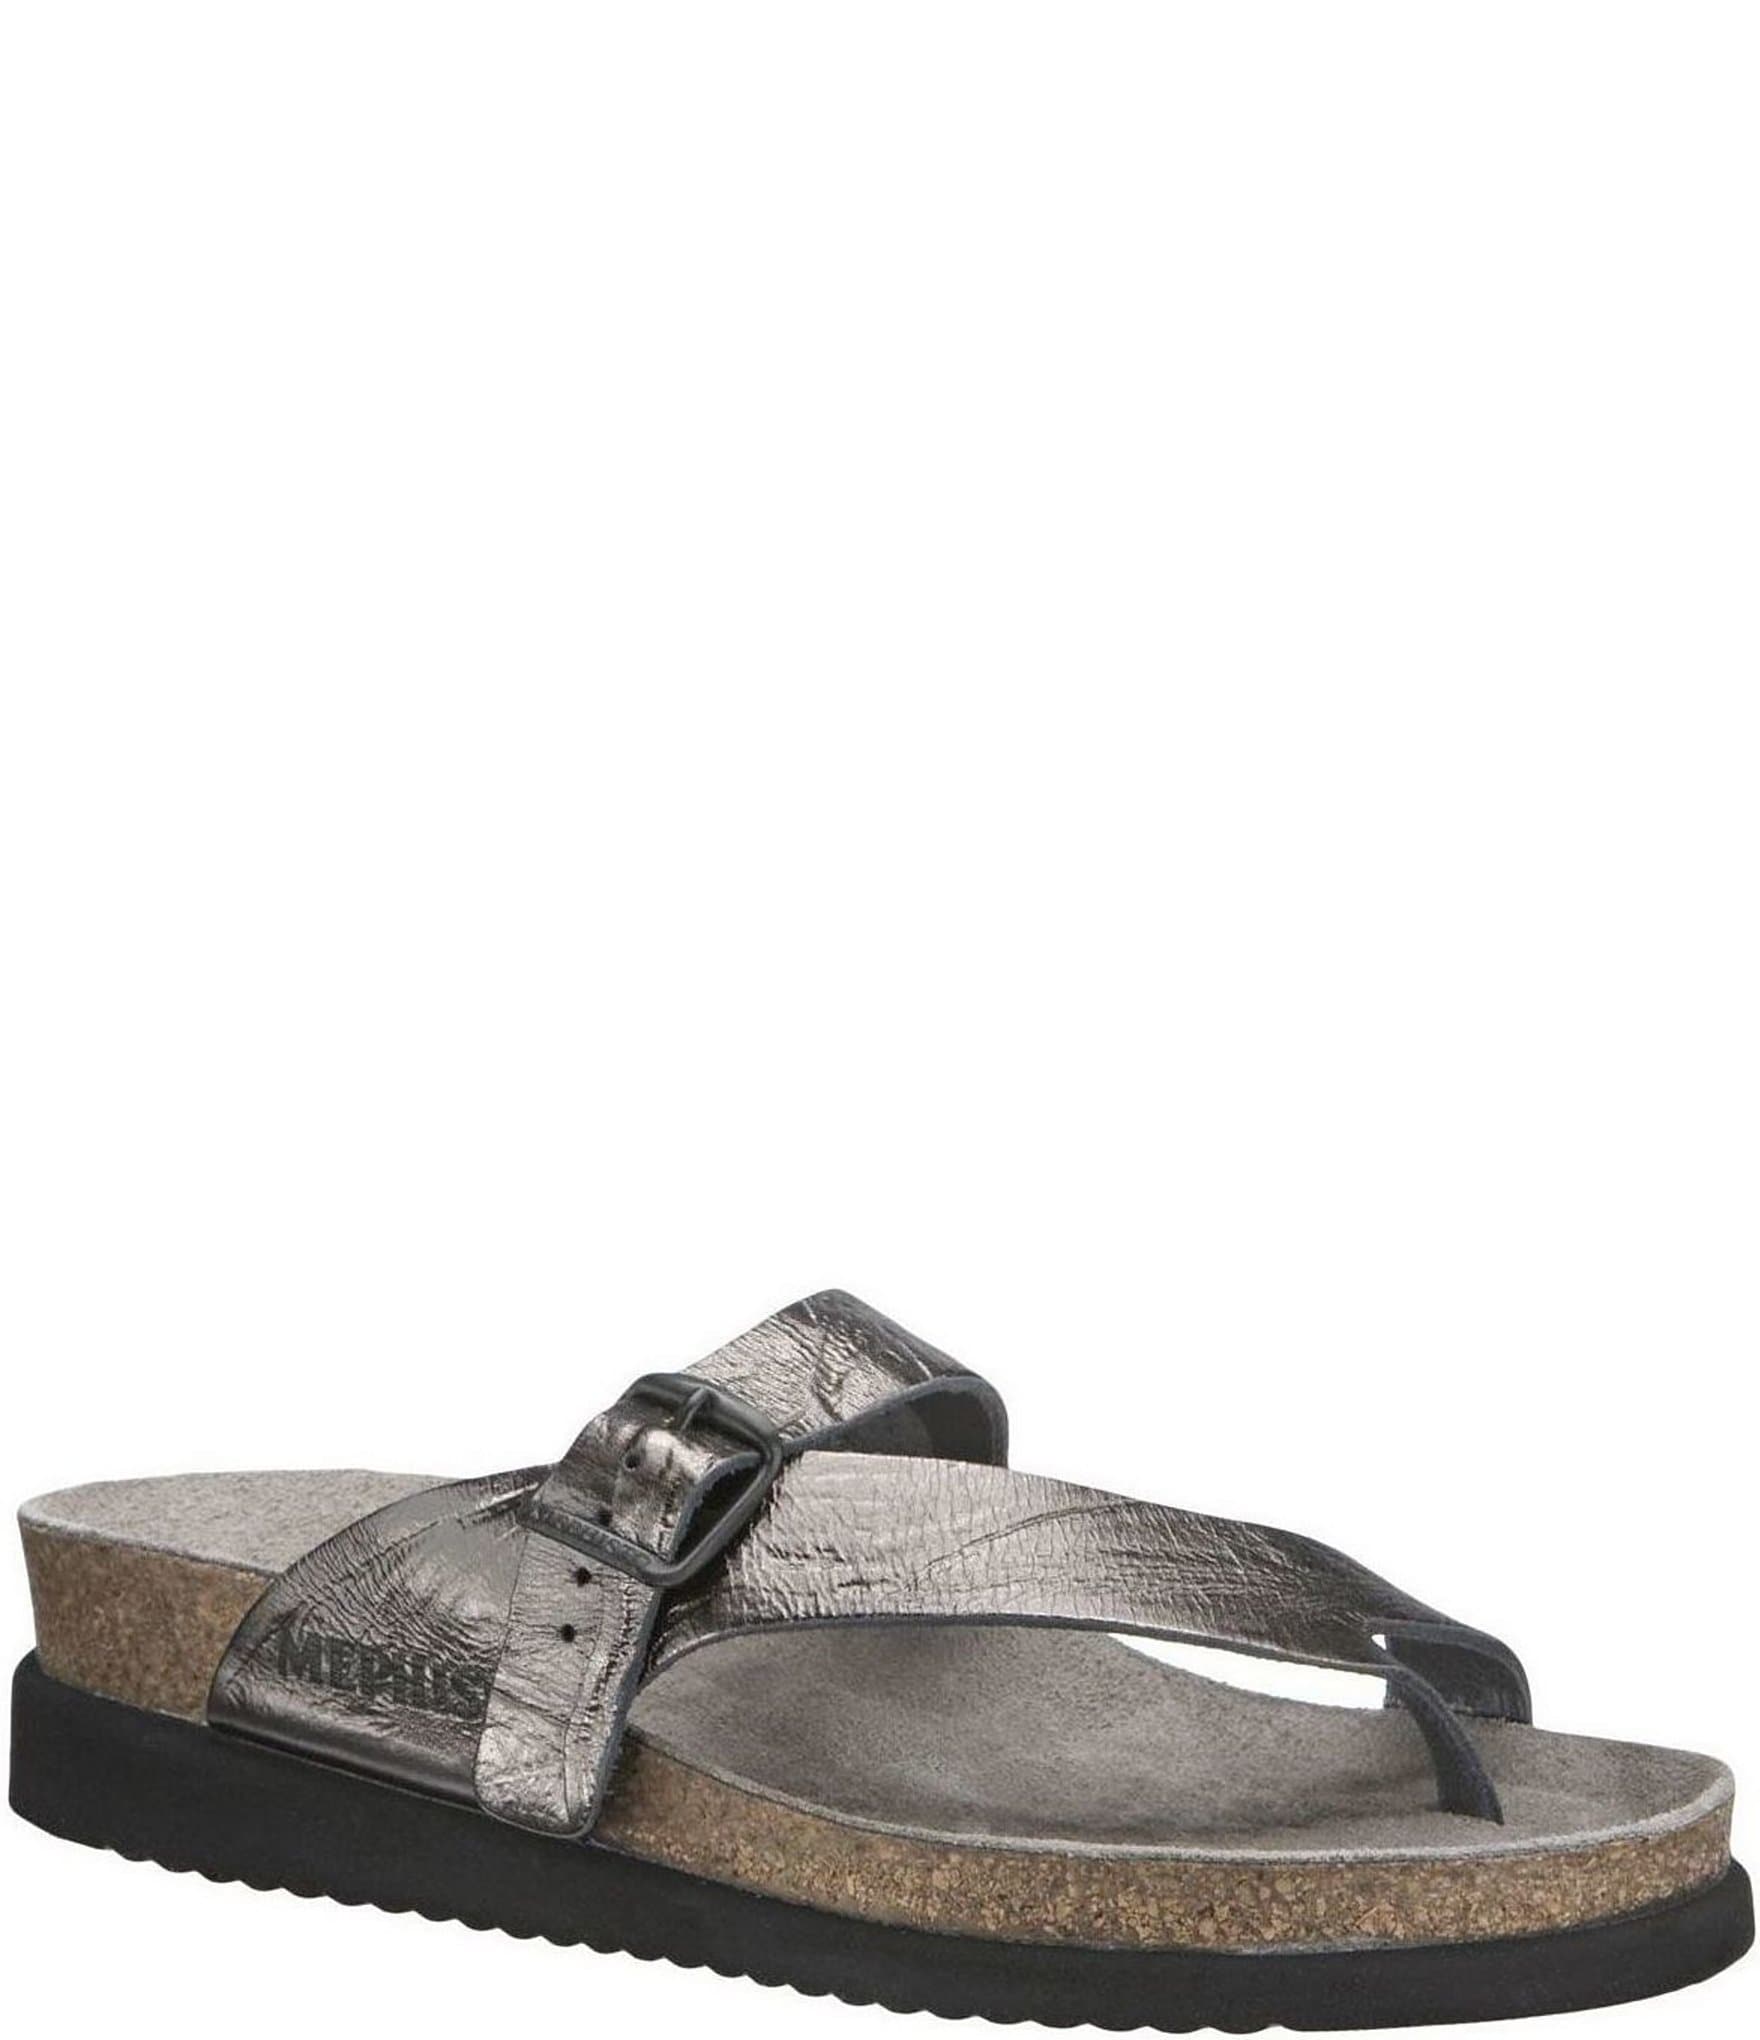 mephisto silver sandals